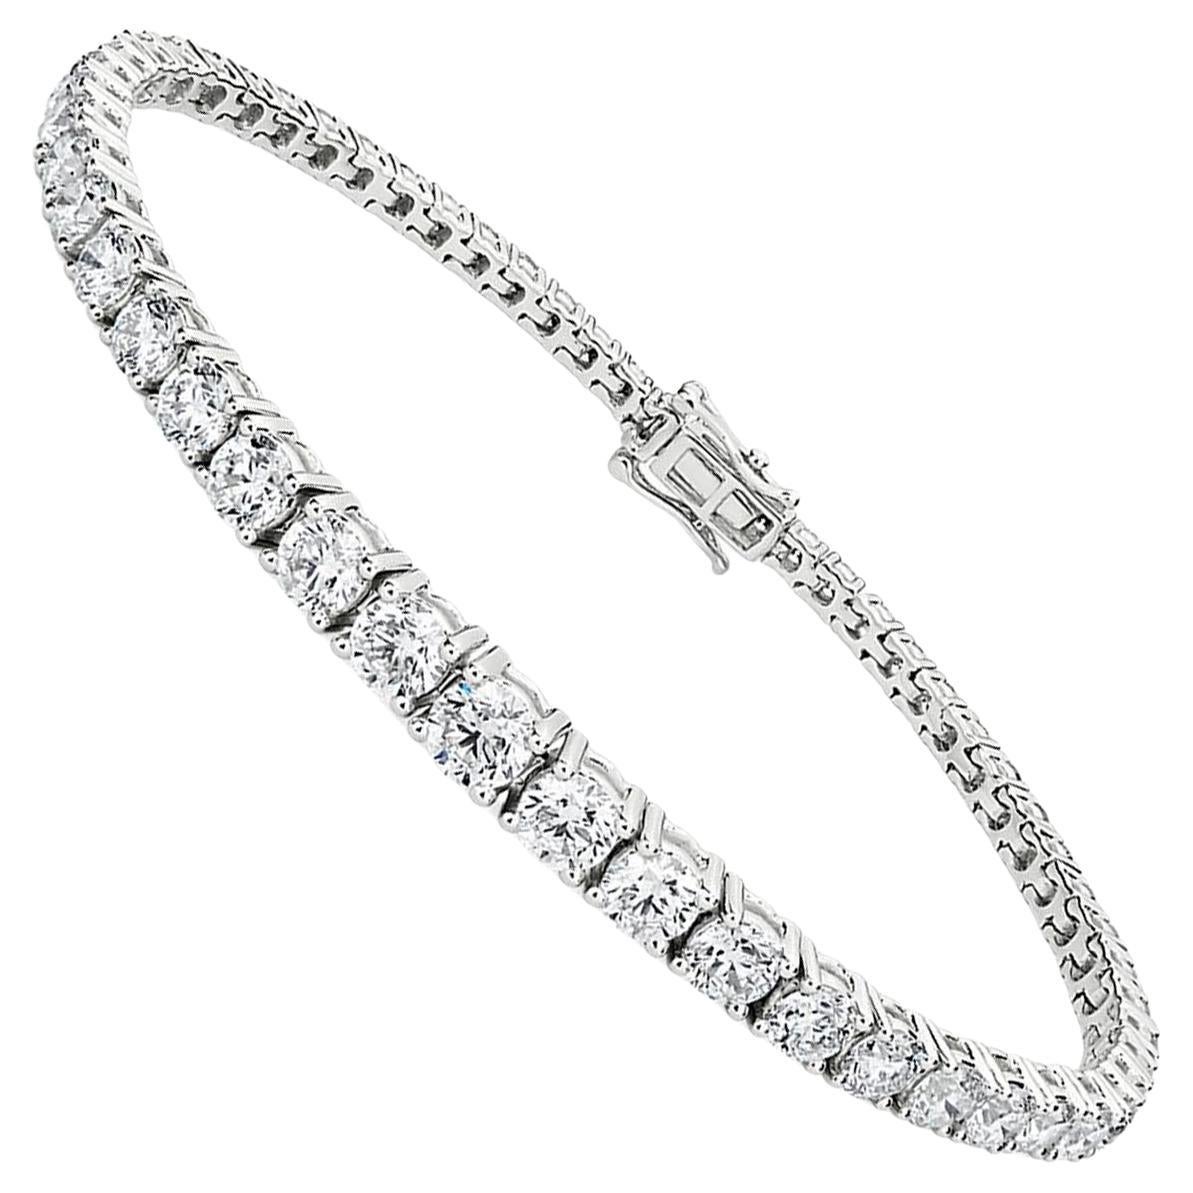 9 Carat Natural Round Cut Diamond Tennis Bracelet Vvs1 4-Prong 18k White Gold For Sale